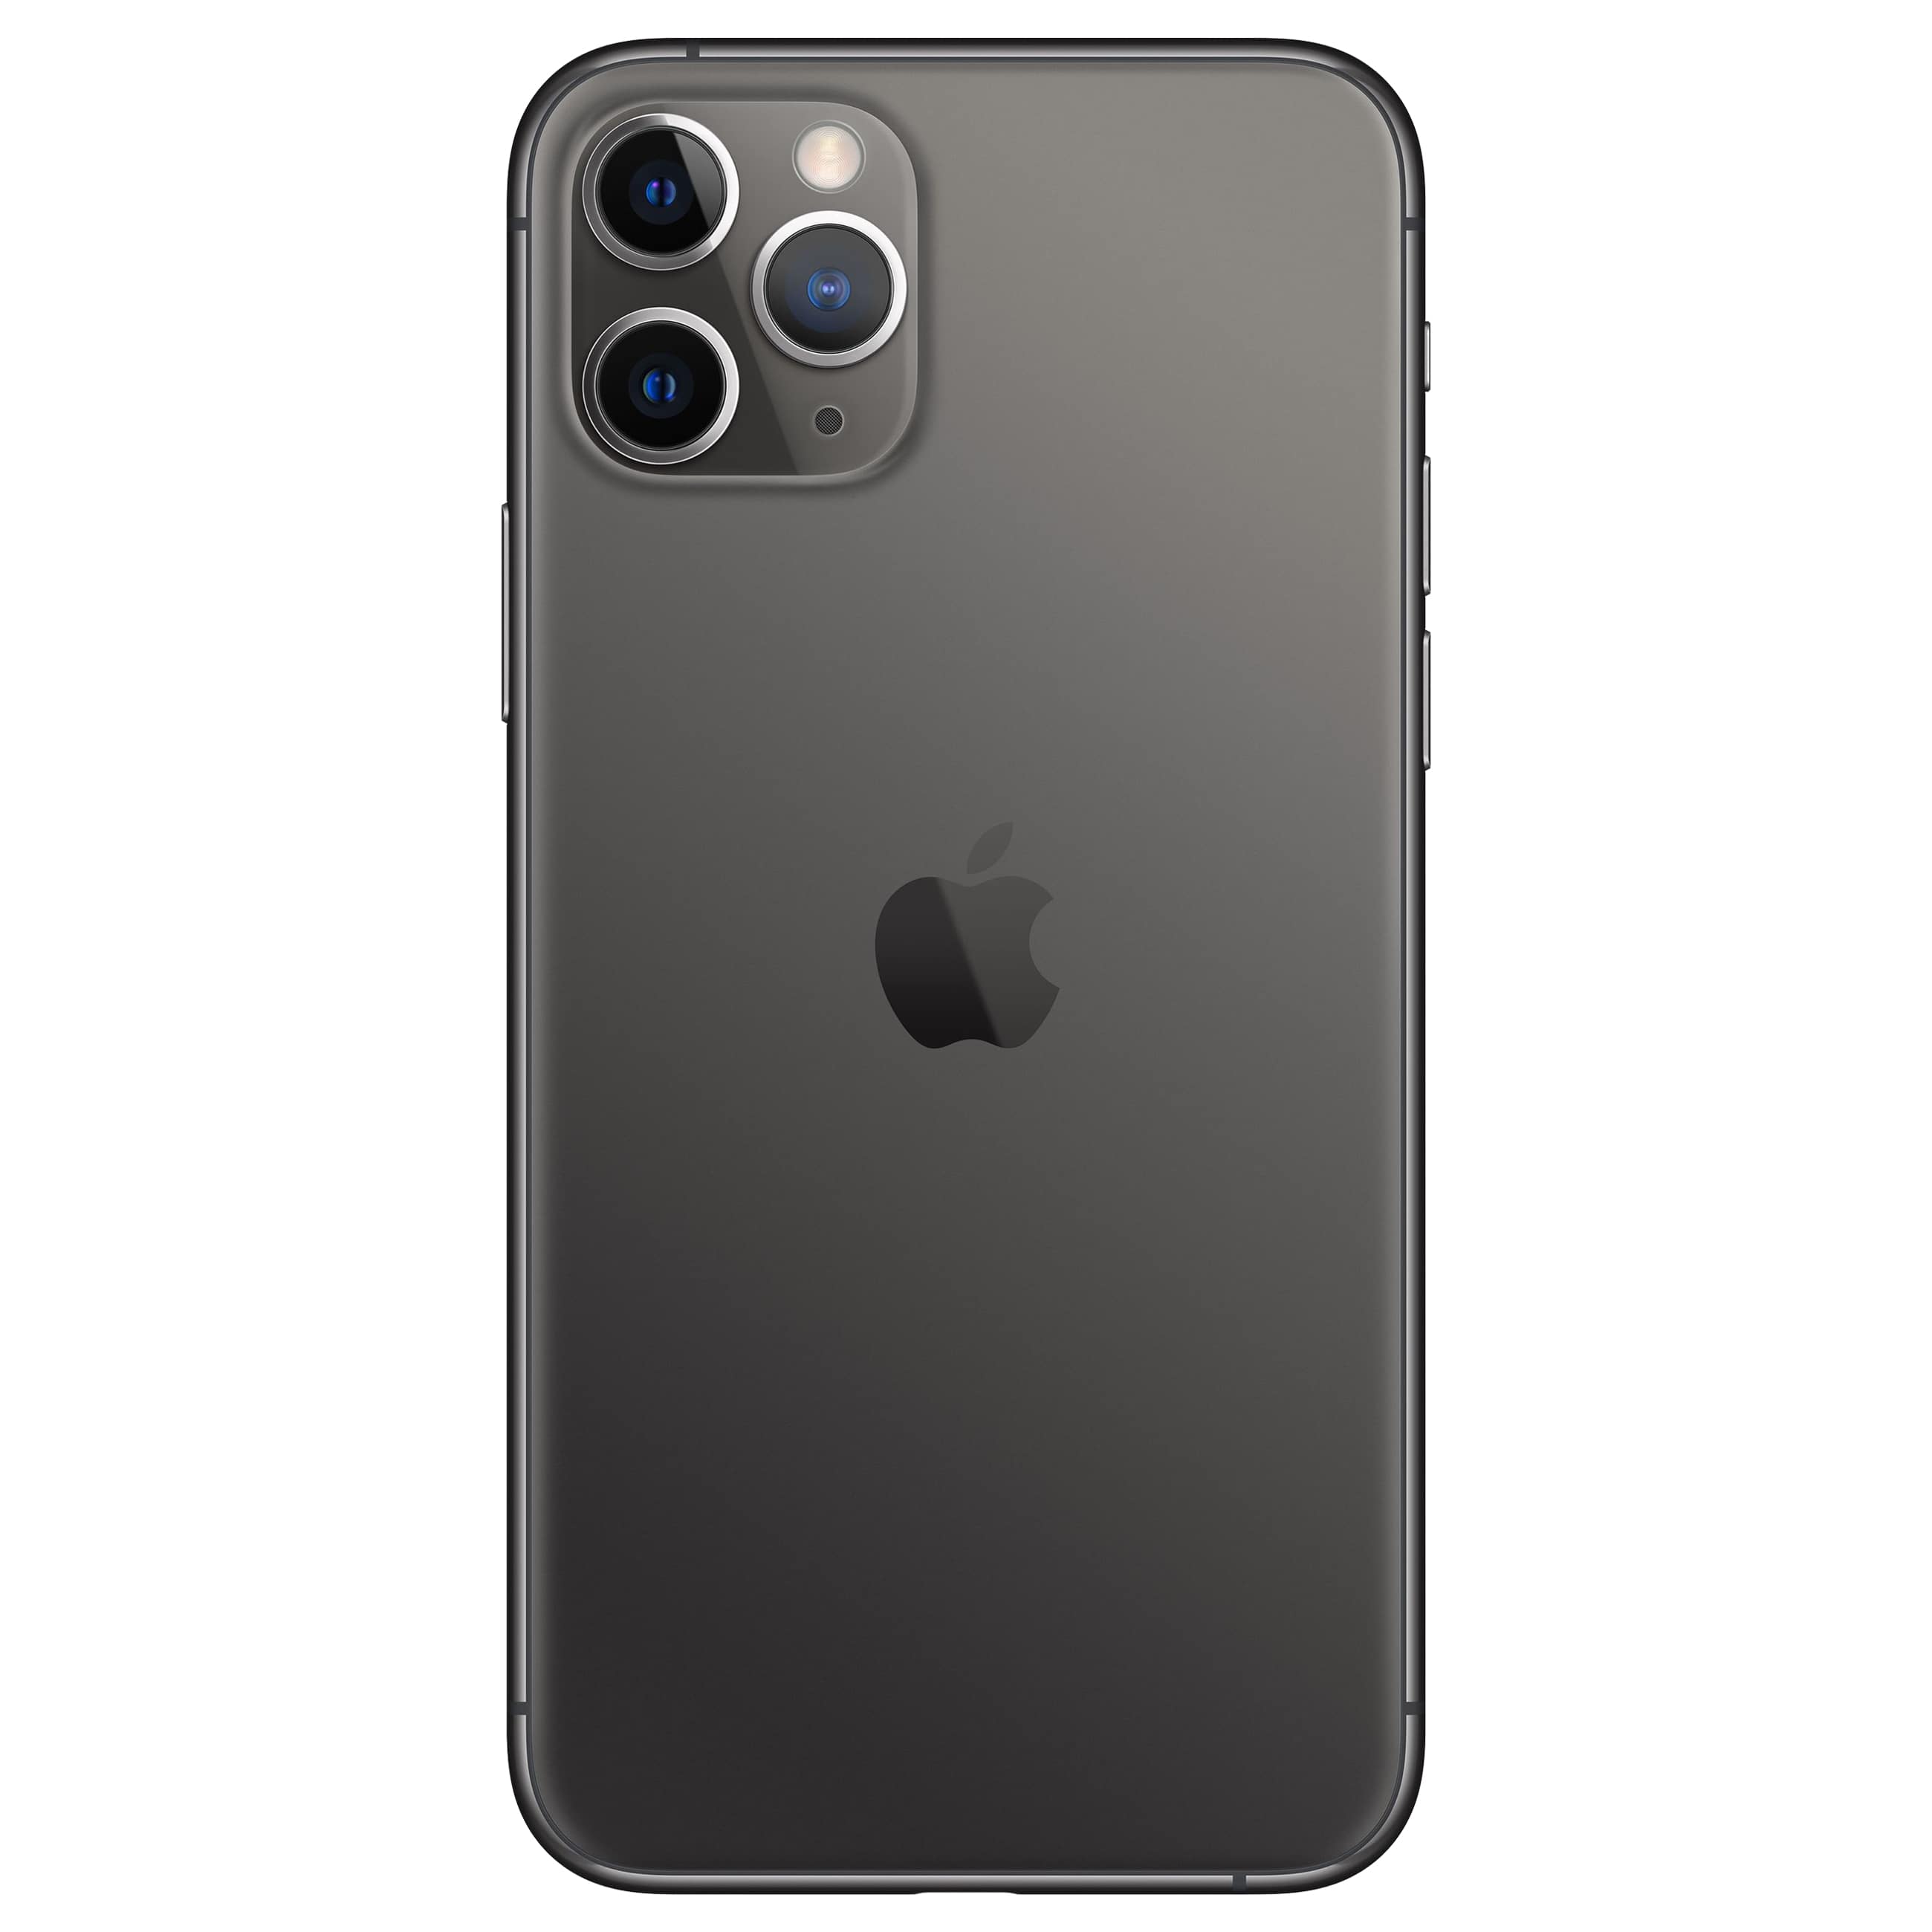 Apple iPhone 11 Pro - 256 GB - Silver